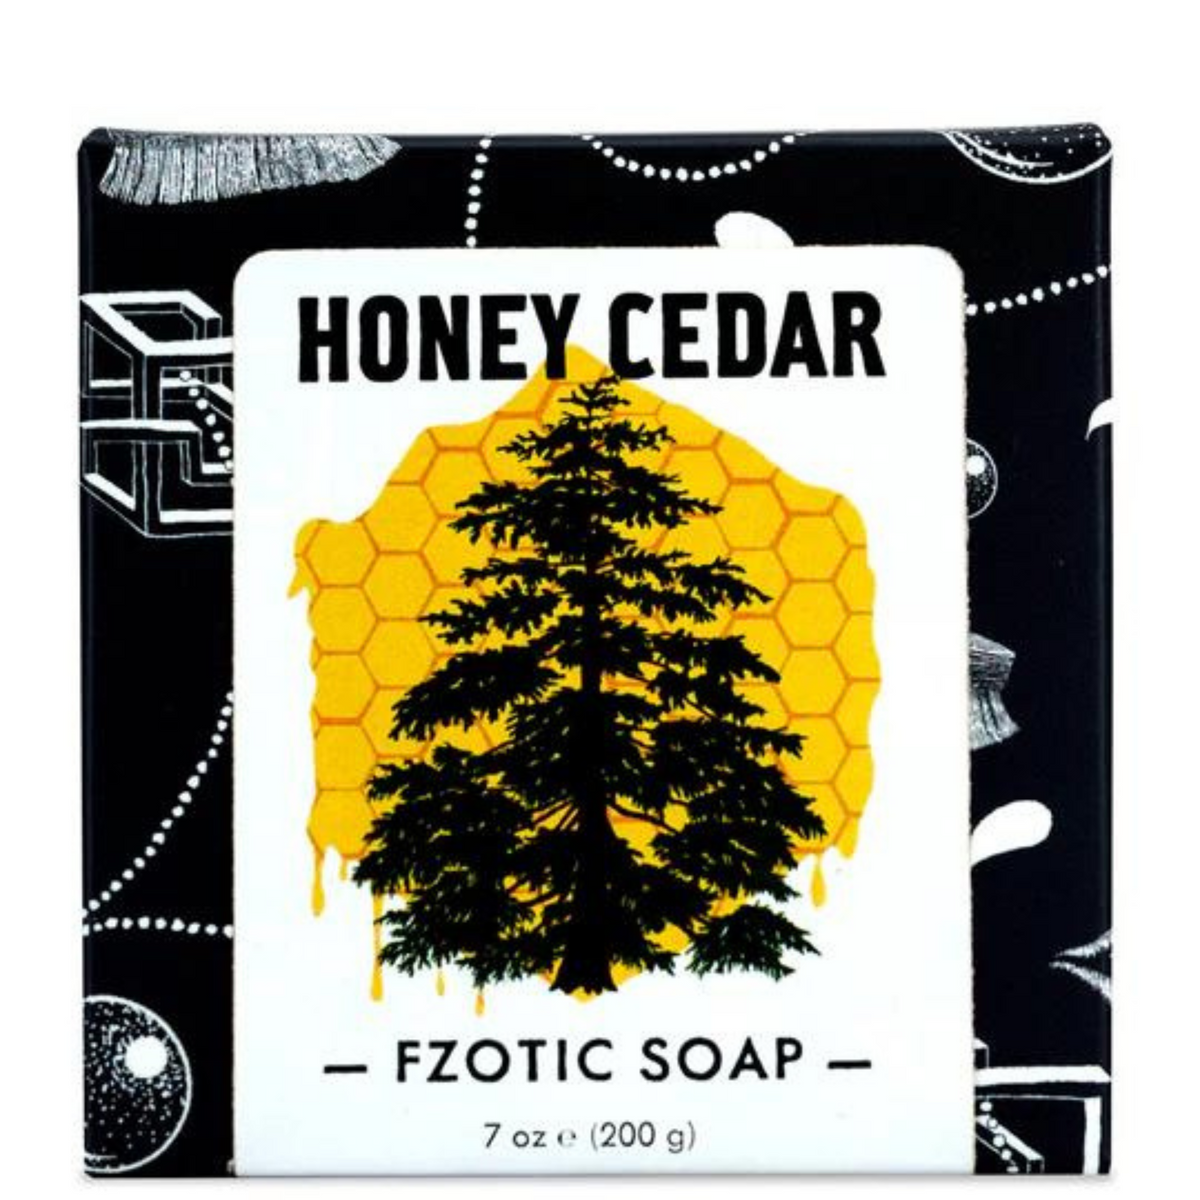 Primary Image of FZOTIC Honey Cedar Soap (7 oz)